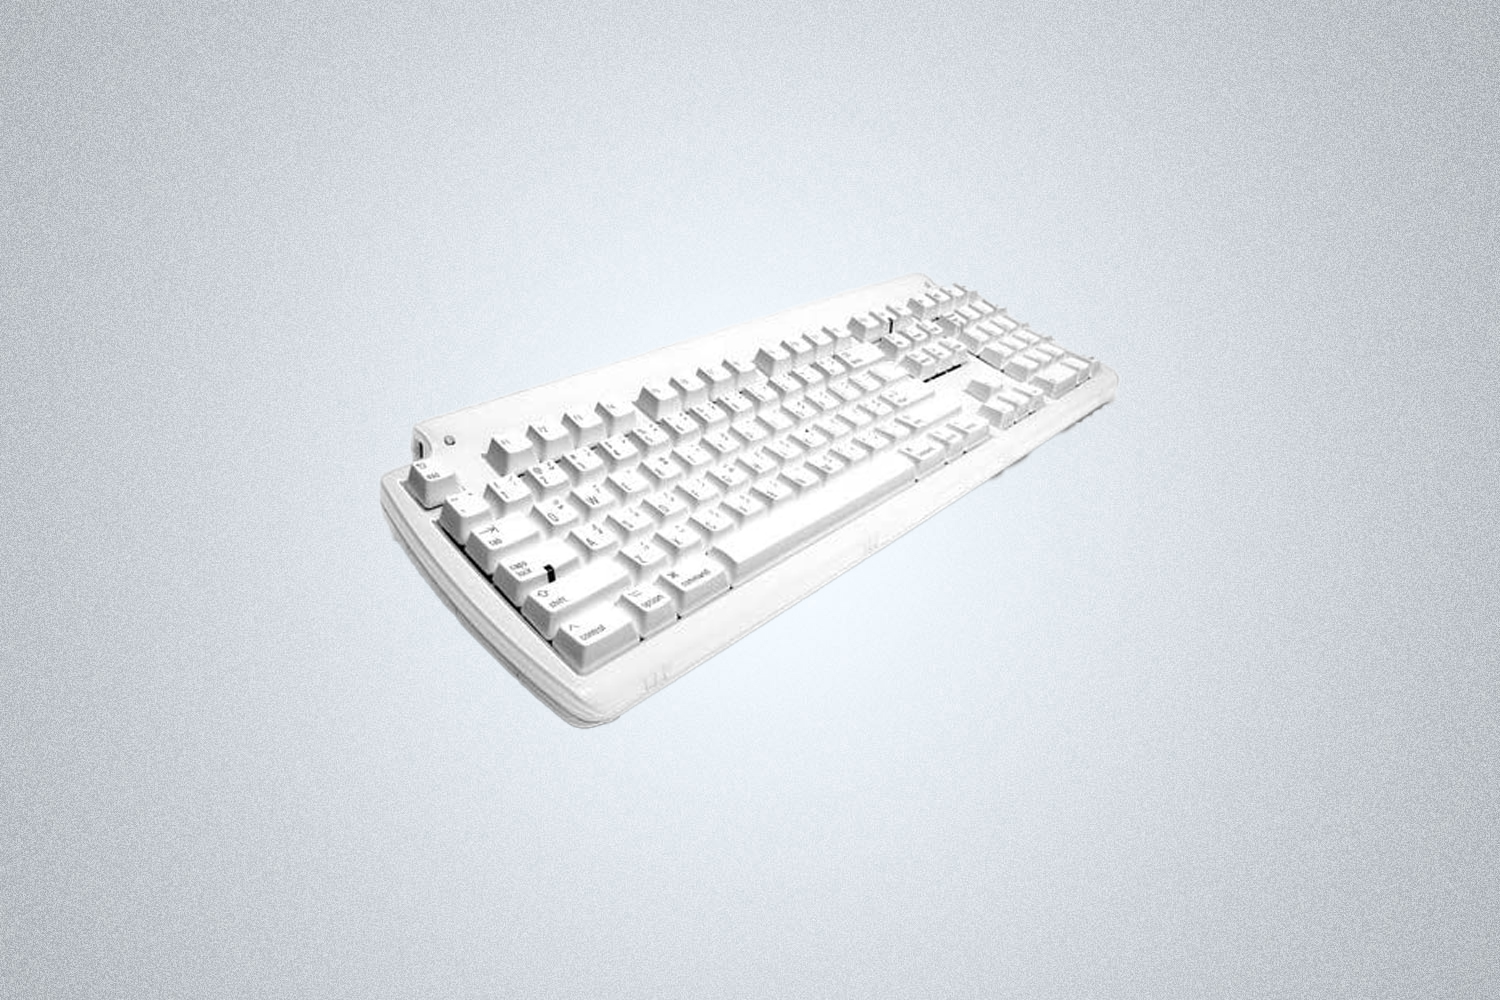 Matias Tactile Pro Keyboard